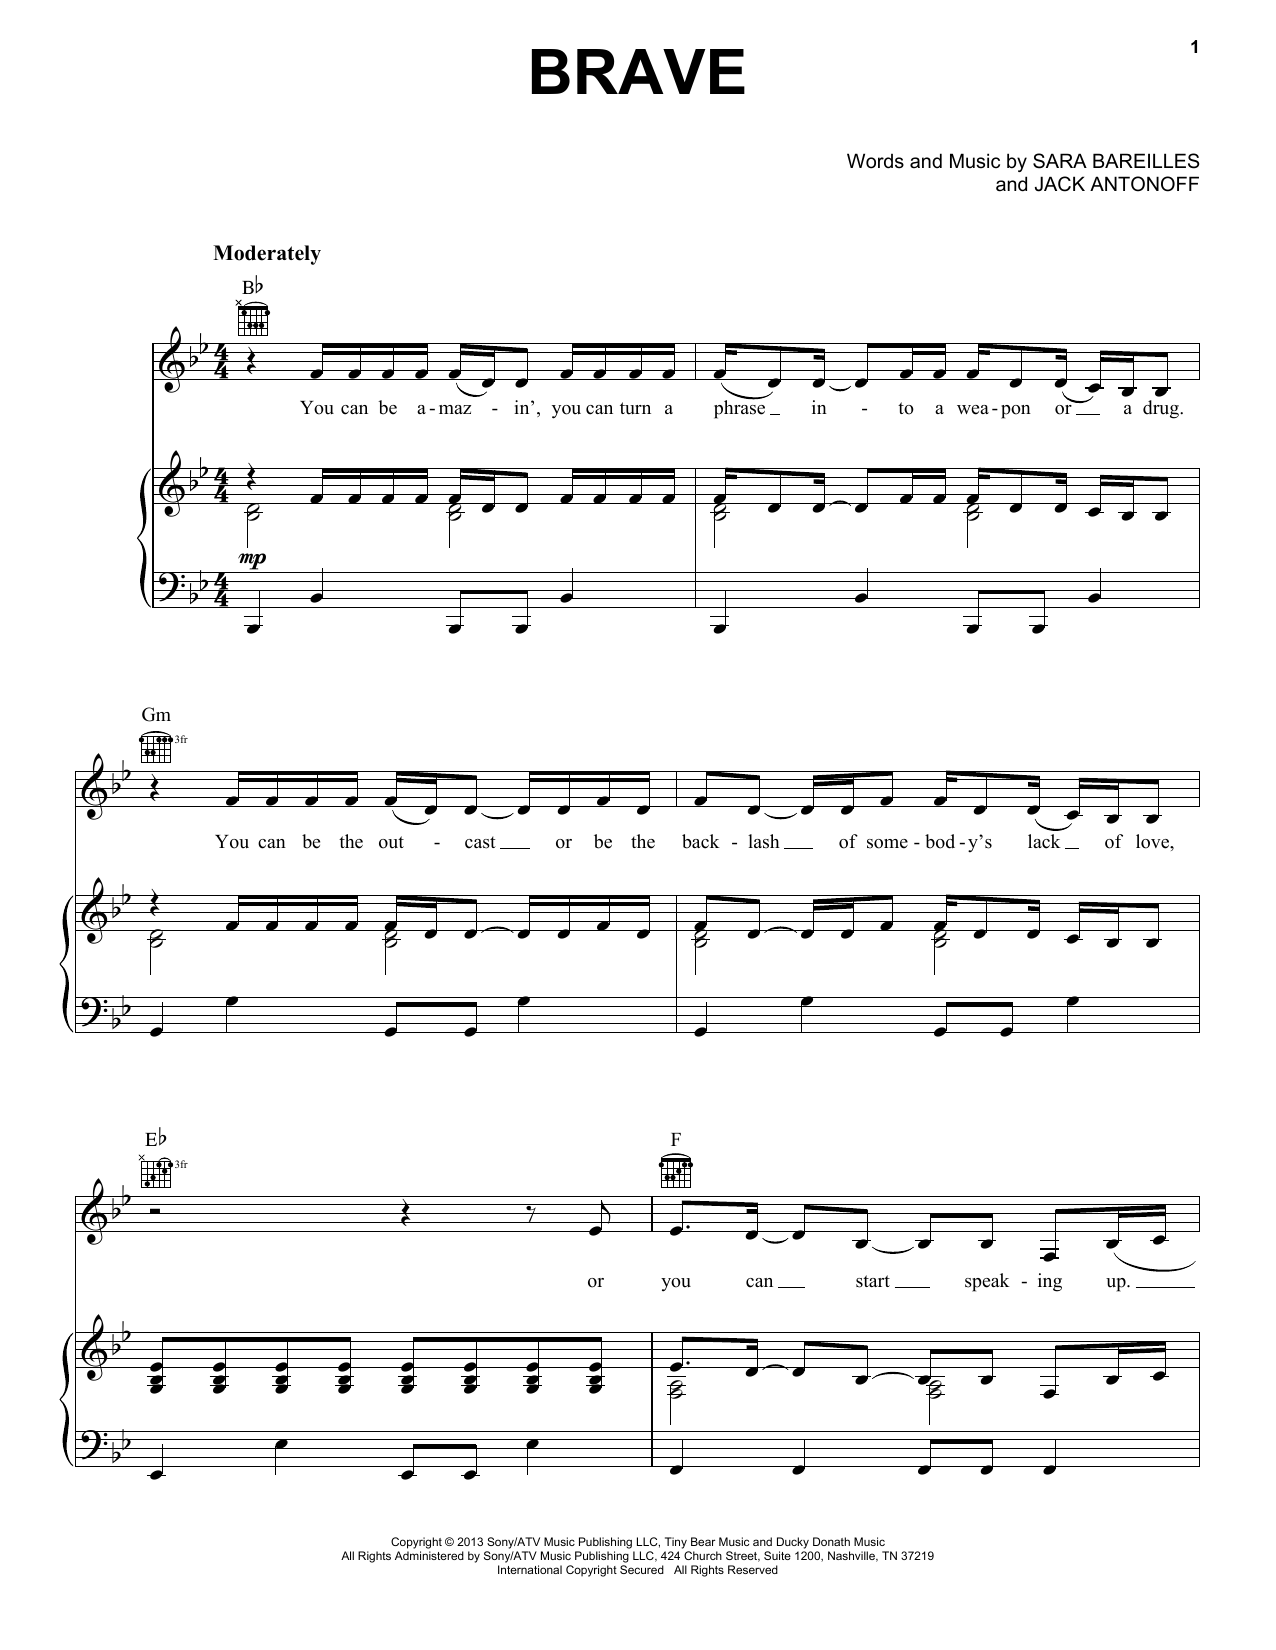 Sara Bareilles Brave Sheet Music Notes & Chords for Clarinet Duet - Download or Print PDF